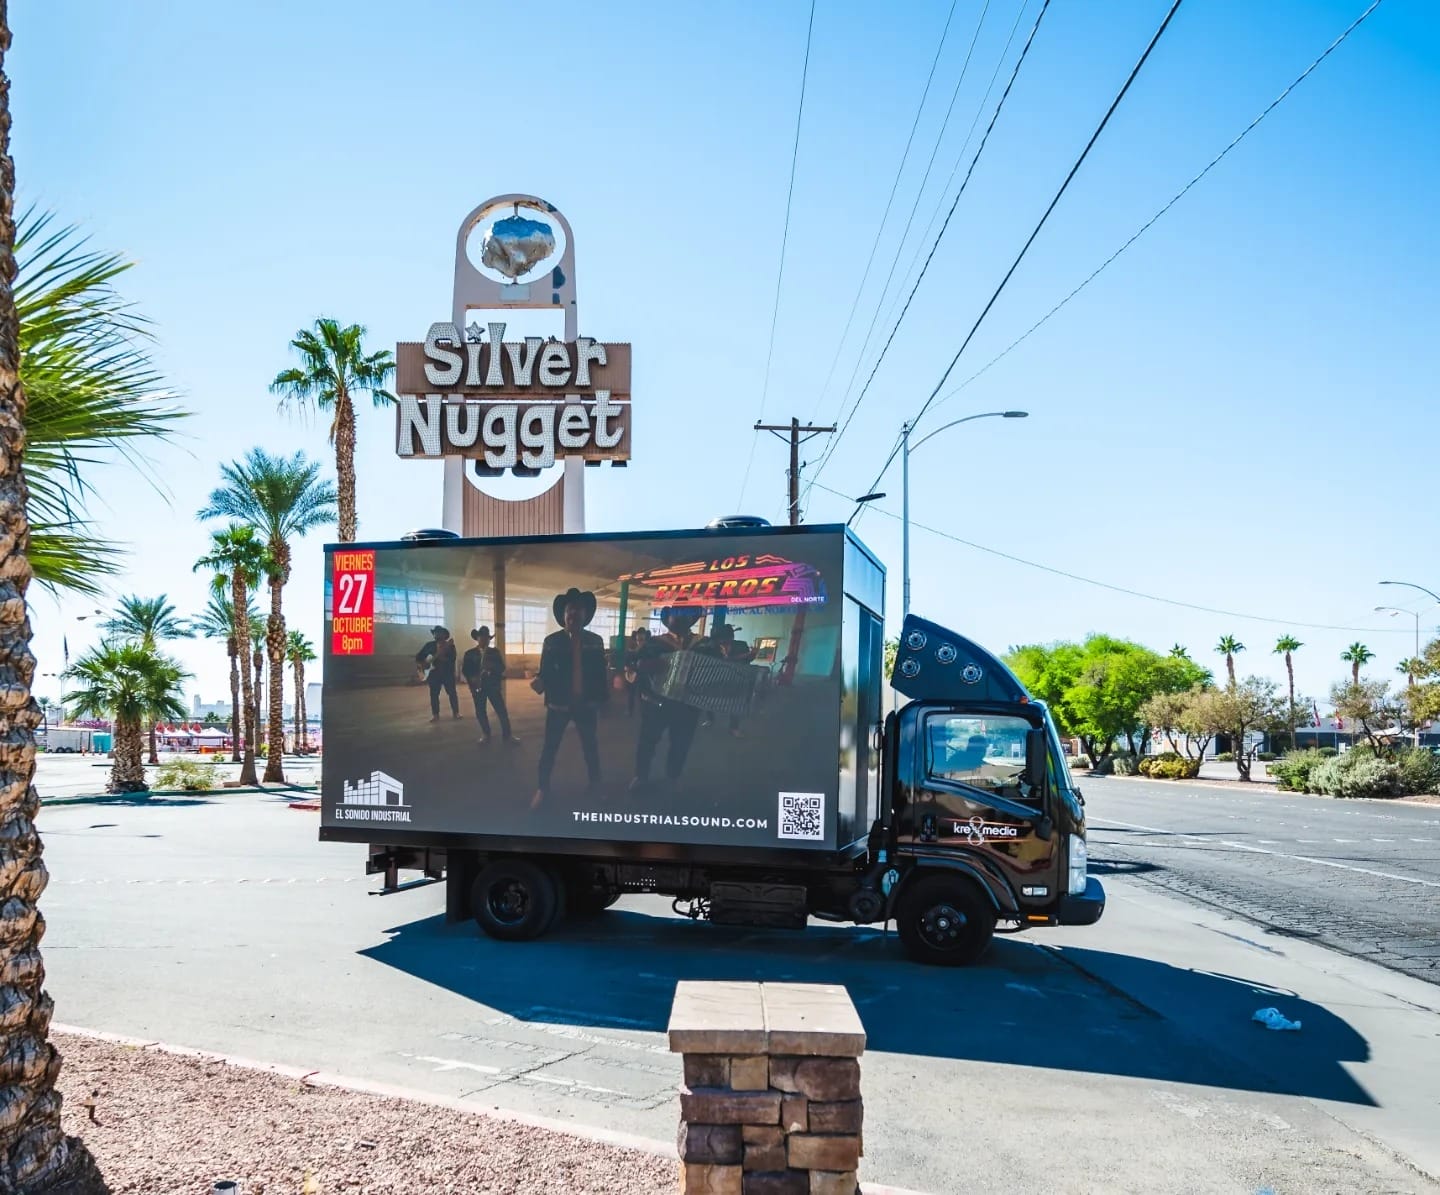 Mobile billboard truck near Silver Nugget sign.